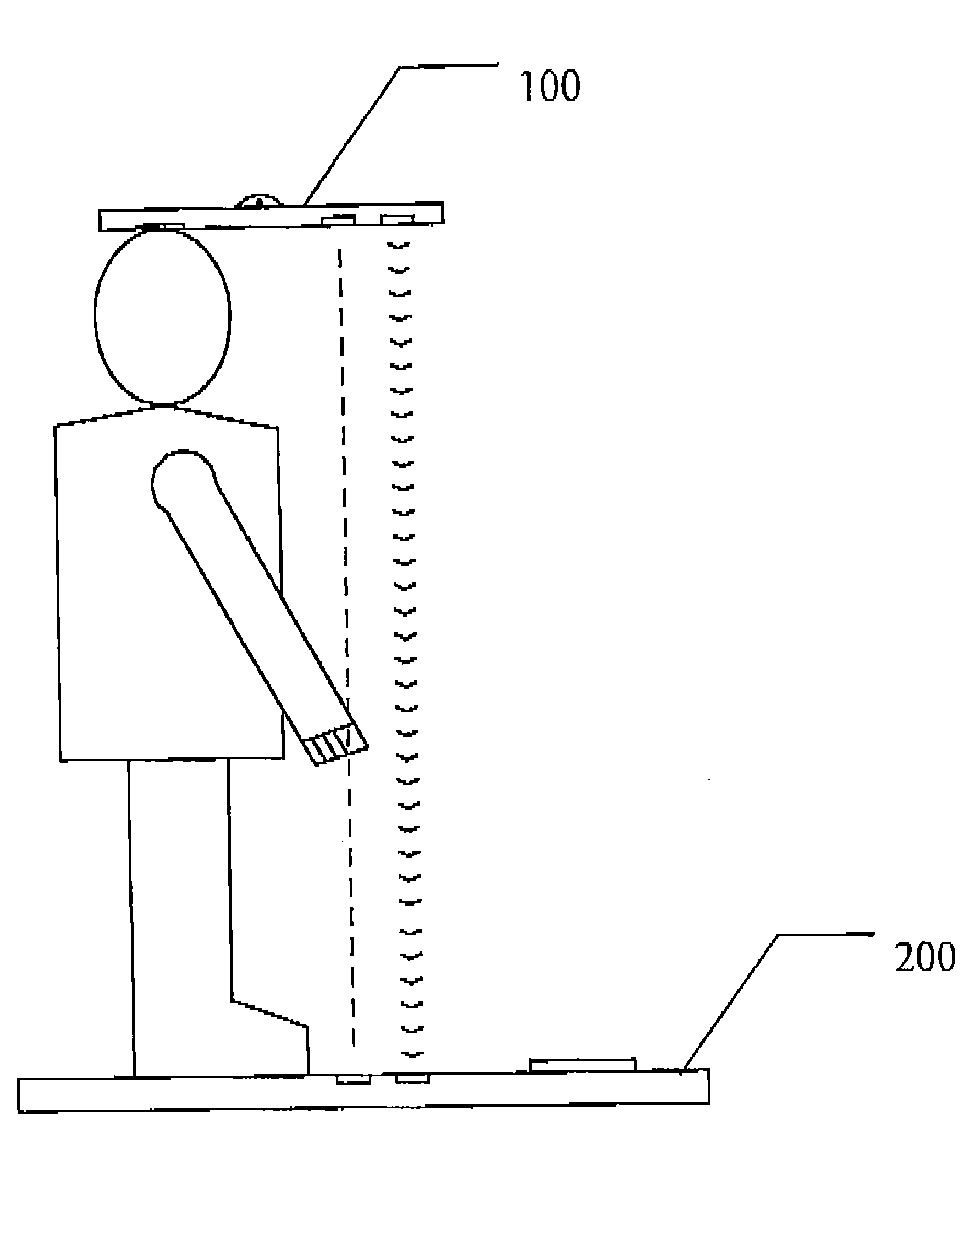 Body height measuring apparatus